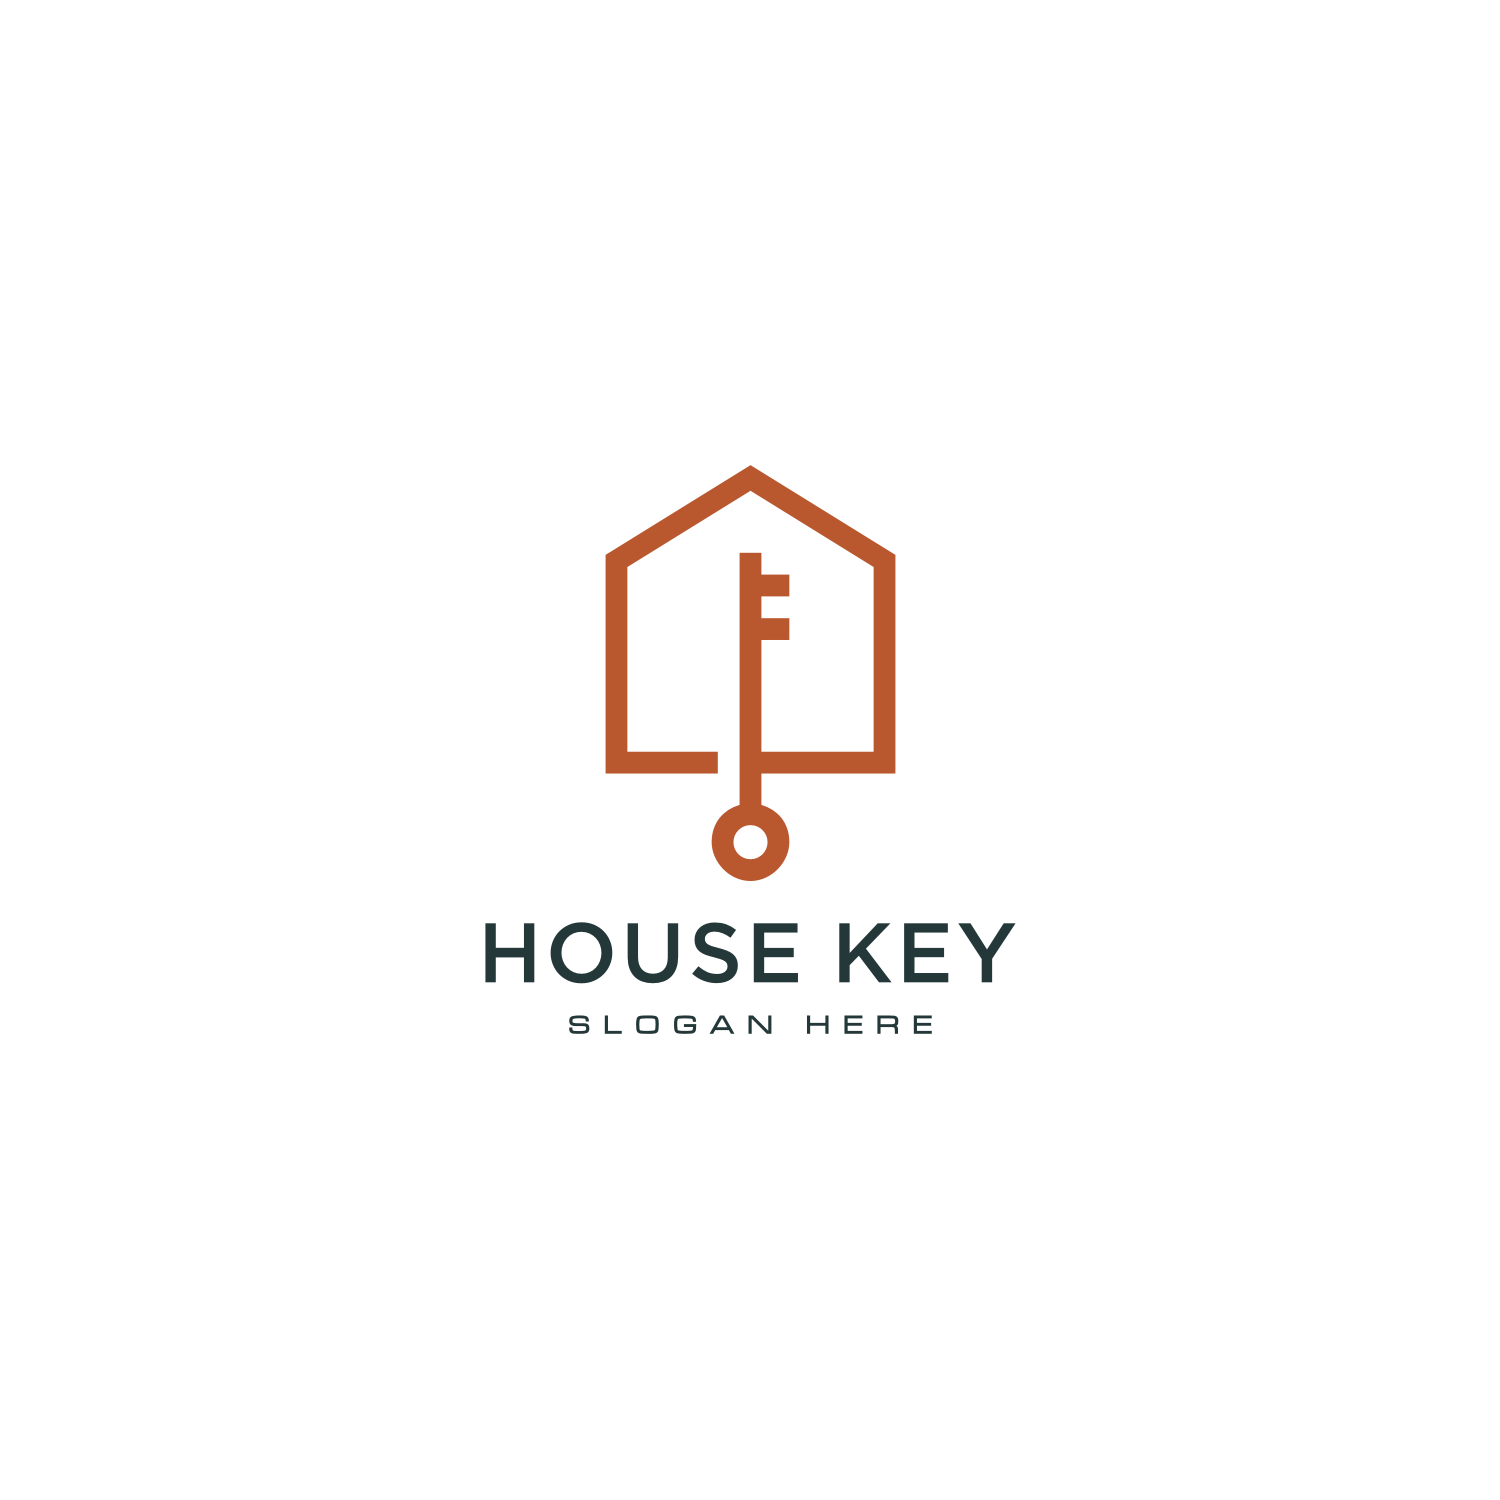 House Key Logo Vector Design Template Cover Image.